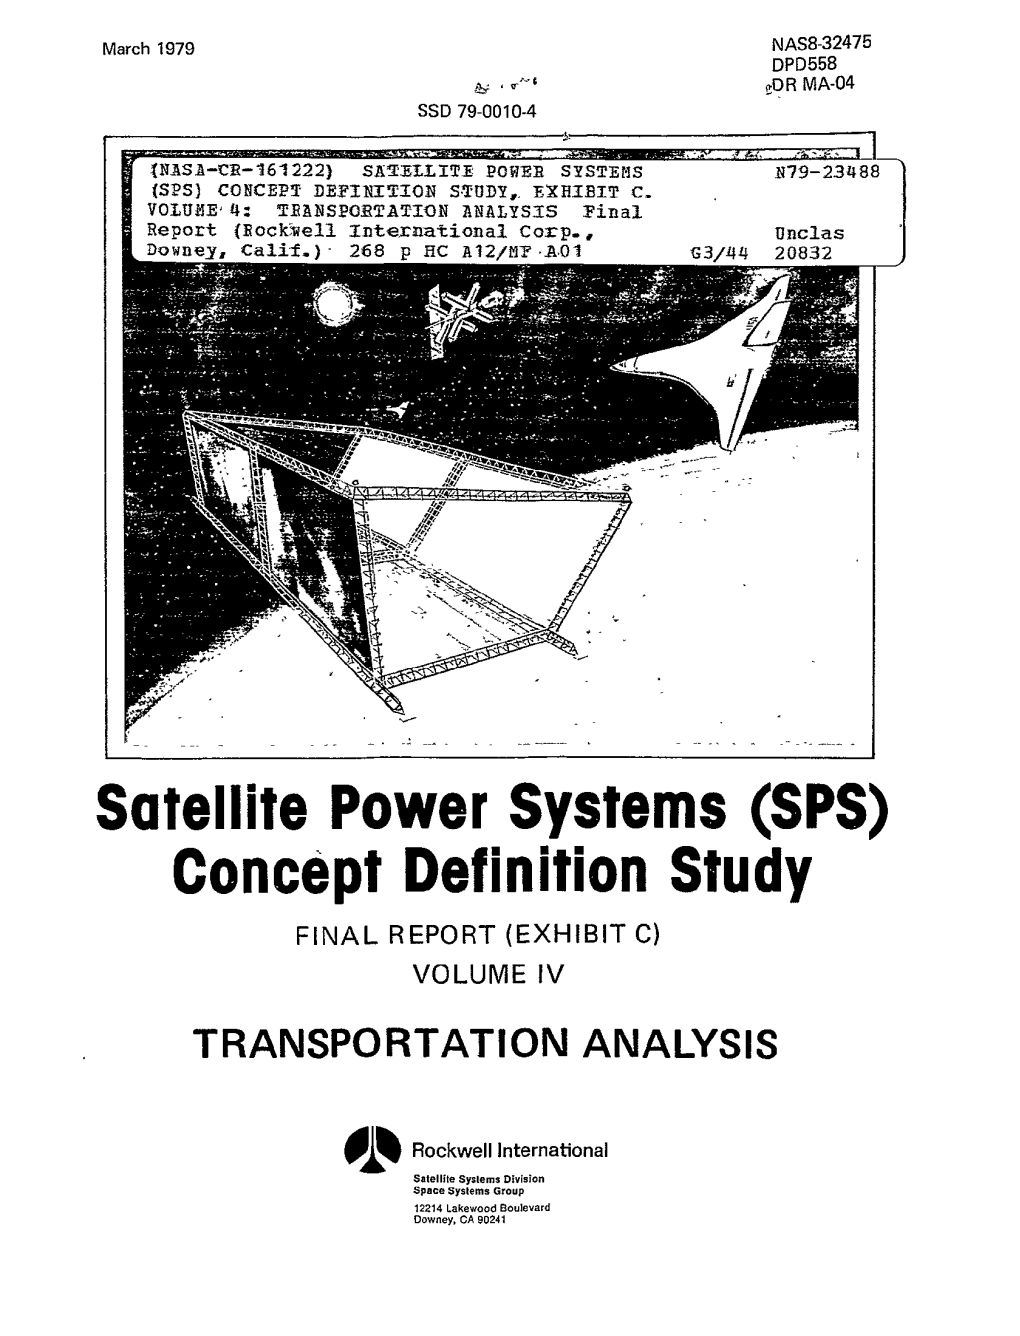 Satellite Power Systems (SPS) Concept Definition Study FINAL REPORT (EXHIBIT C) VOLUME IV TRANSPORTATION ANALYSIS